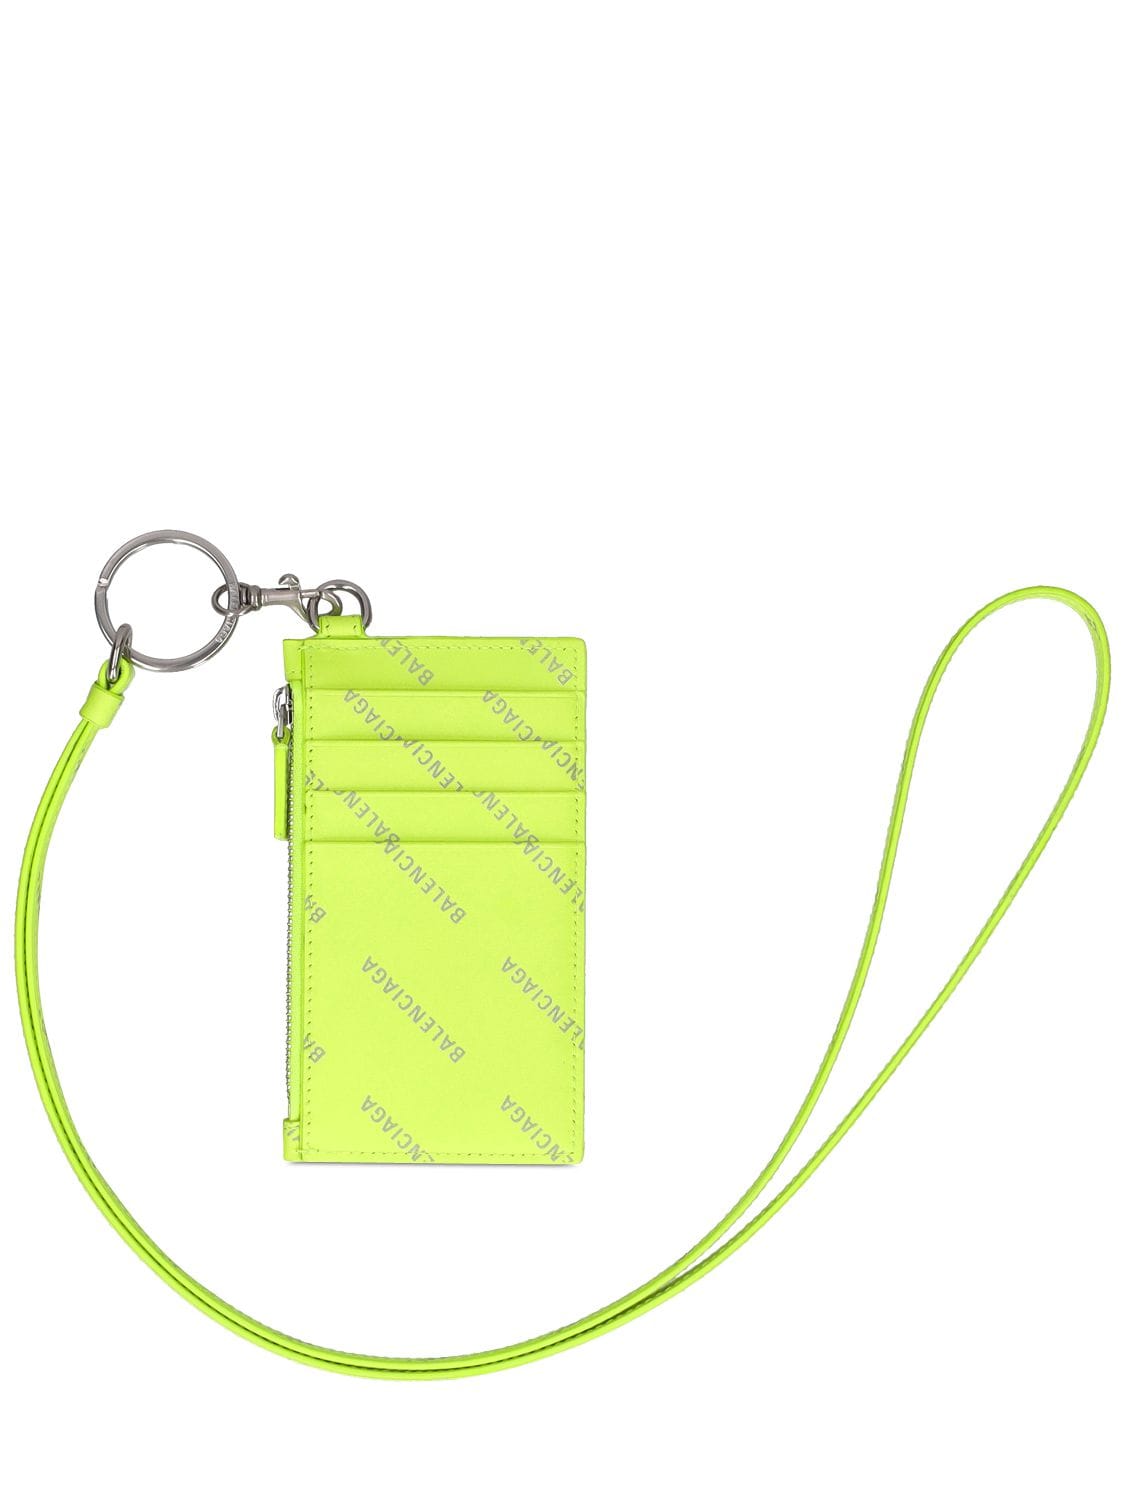 Balenciaga Leather Wallet Key Holder W/ Neck Strap In Neon Yellow